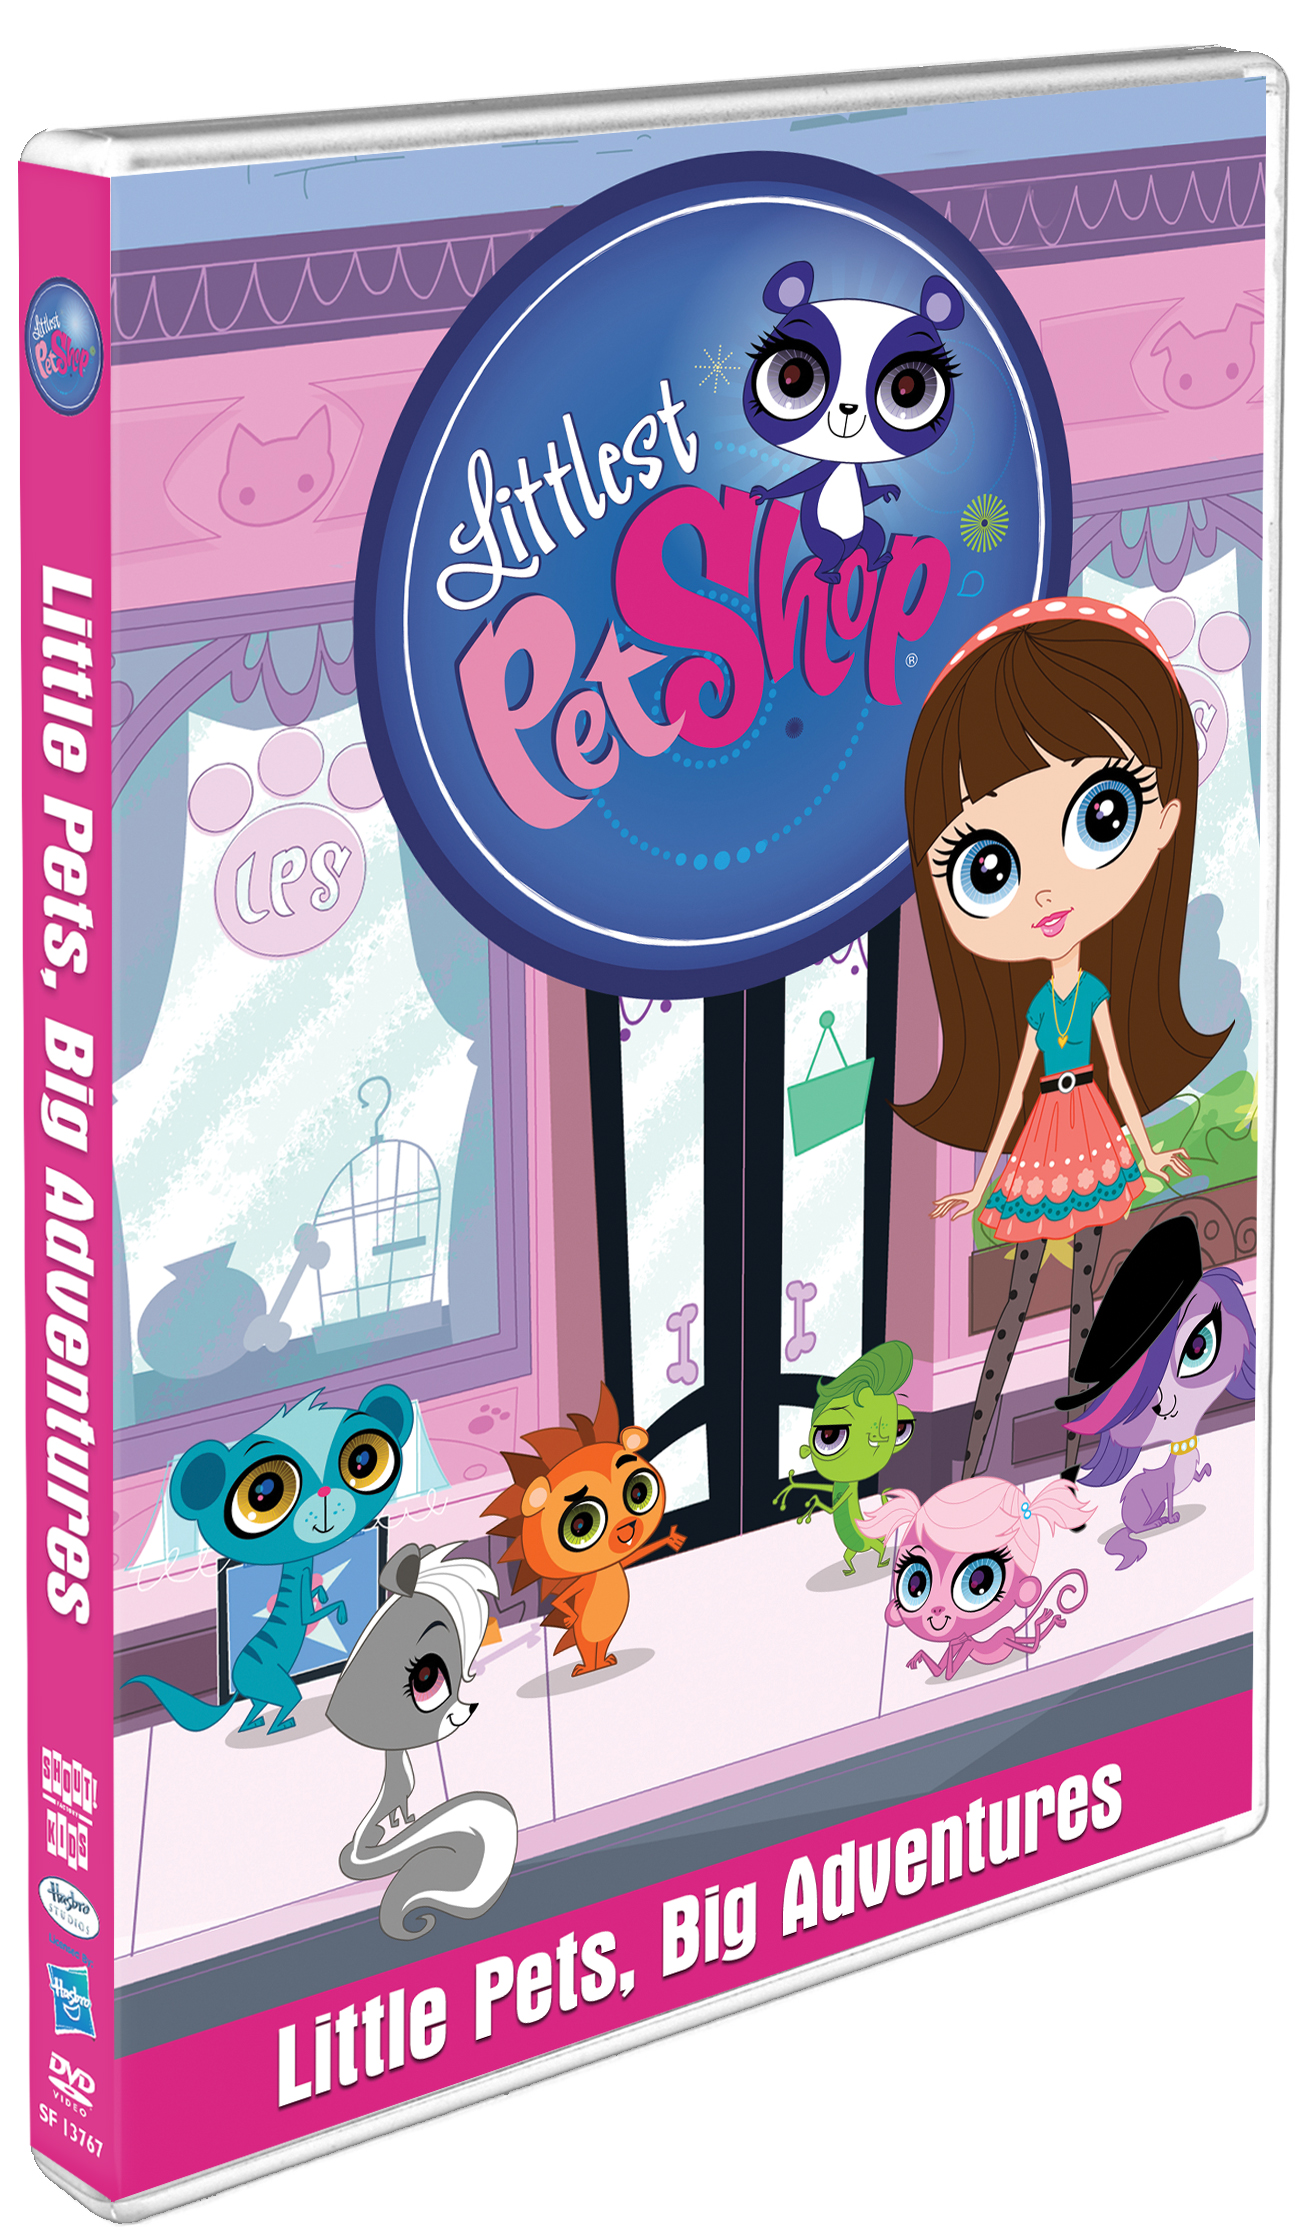 LITTLEST PET SHOP Comes Home on DVD 1/15/2013